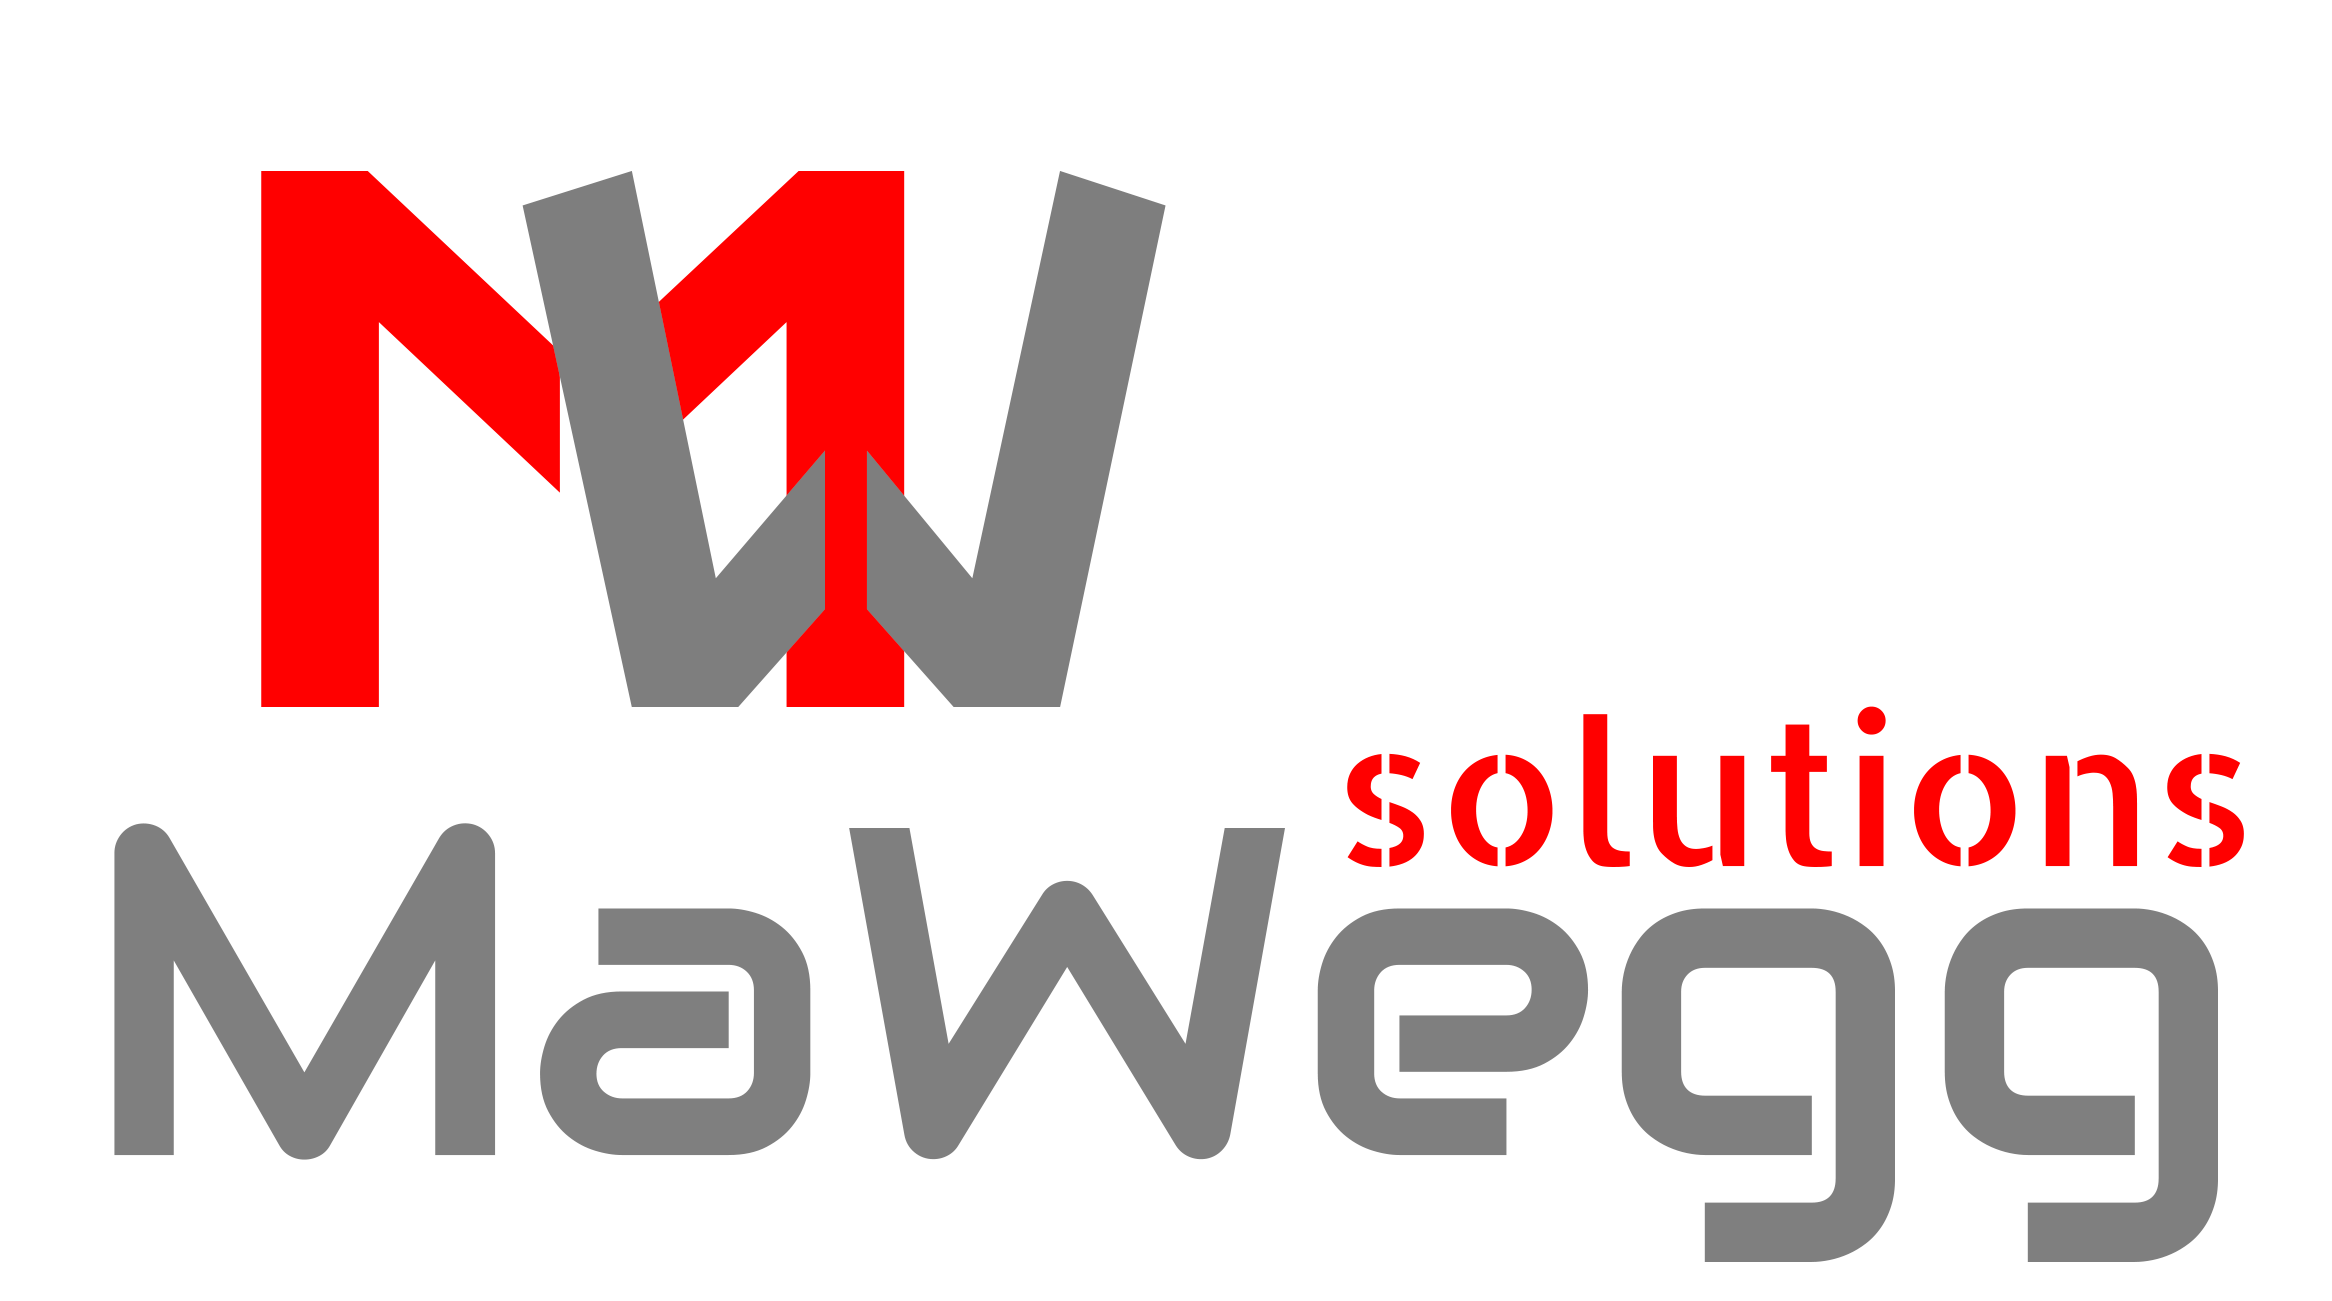 MaWegg solutions